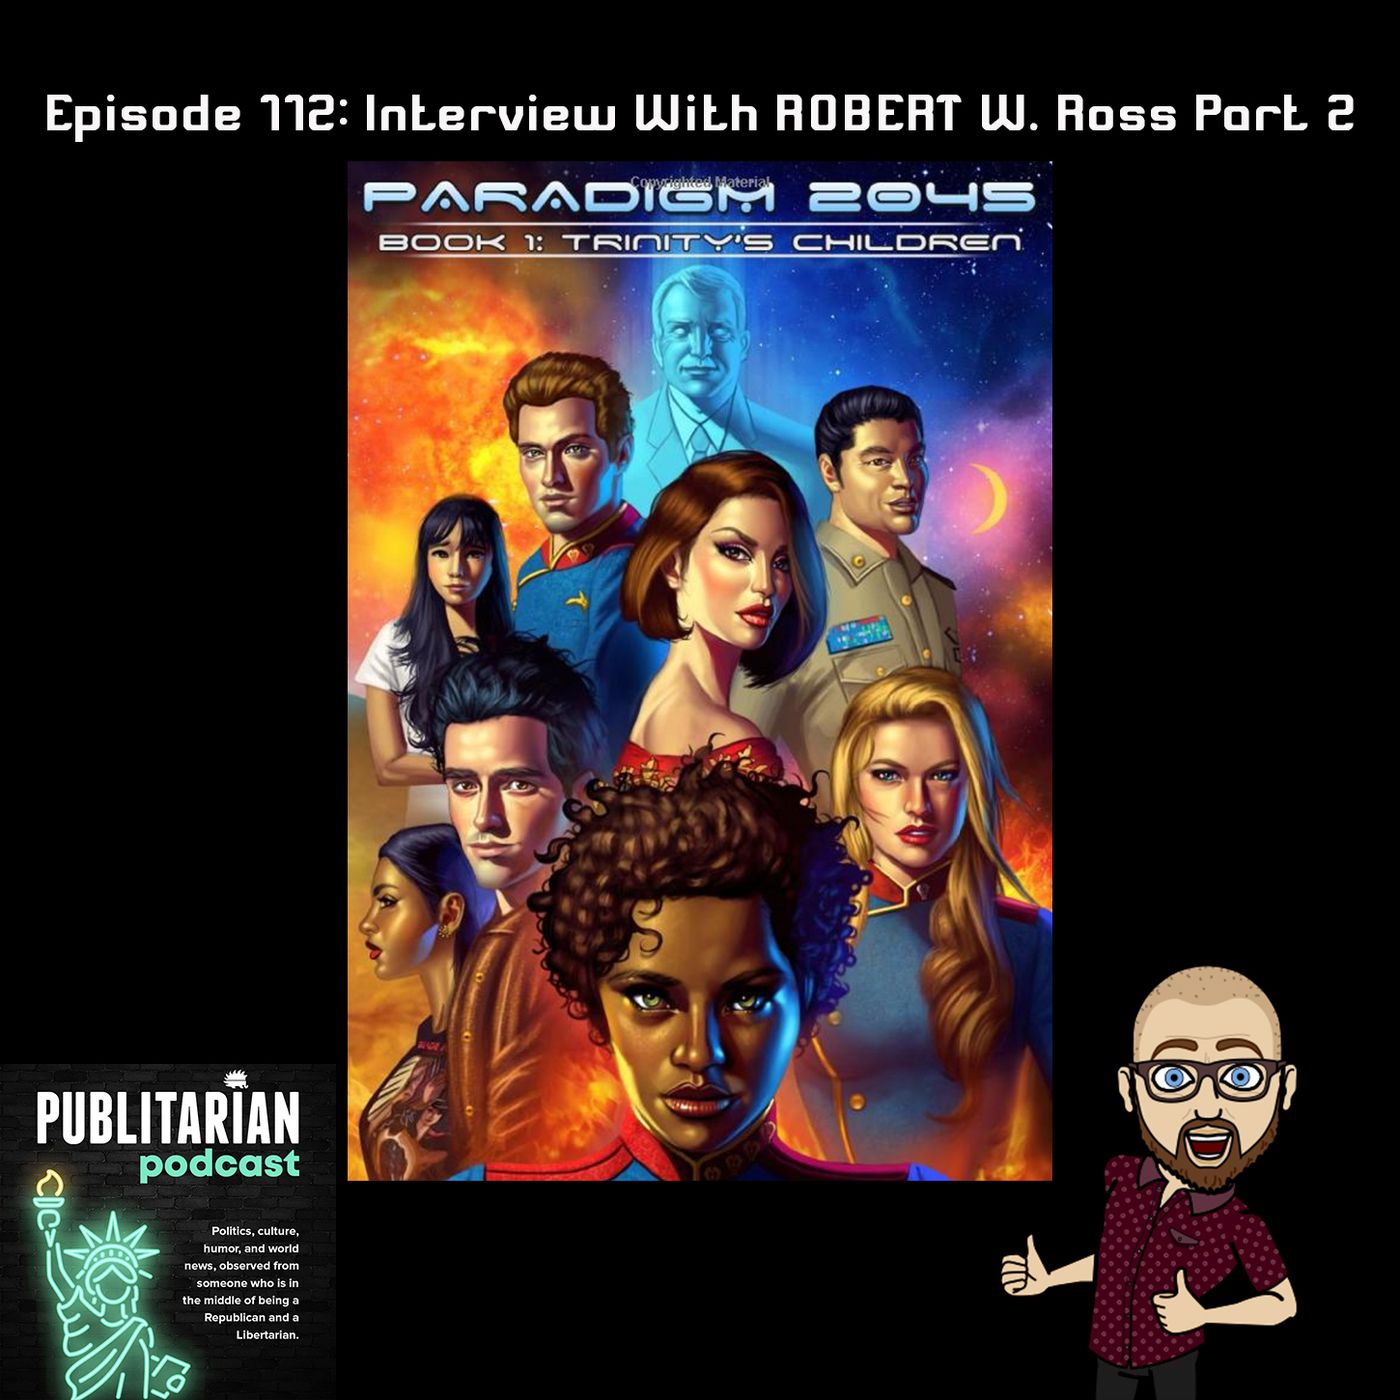 Episode 112 - Interview With Robert W. Ross Part 2